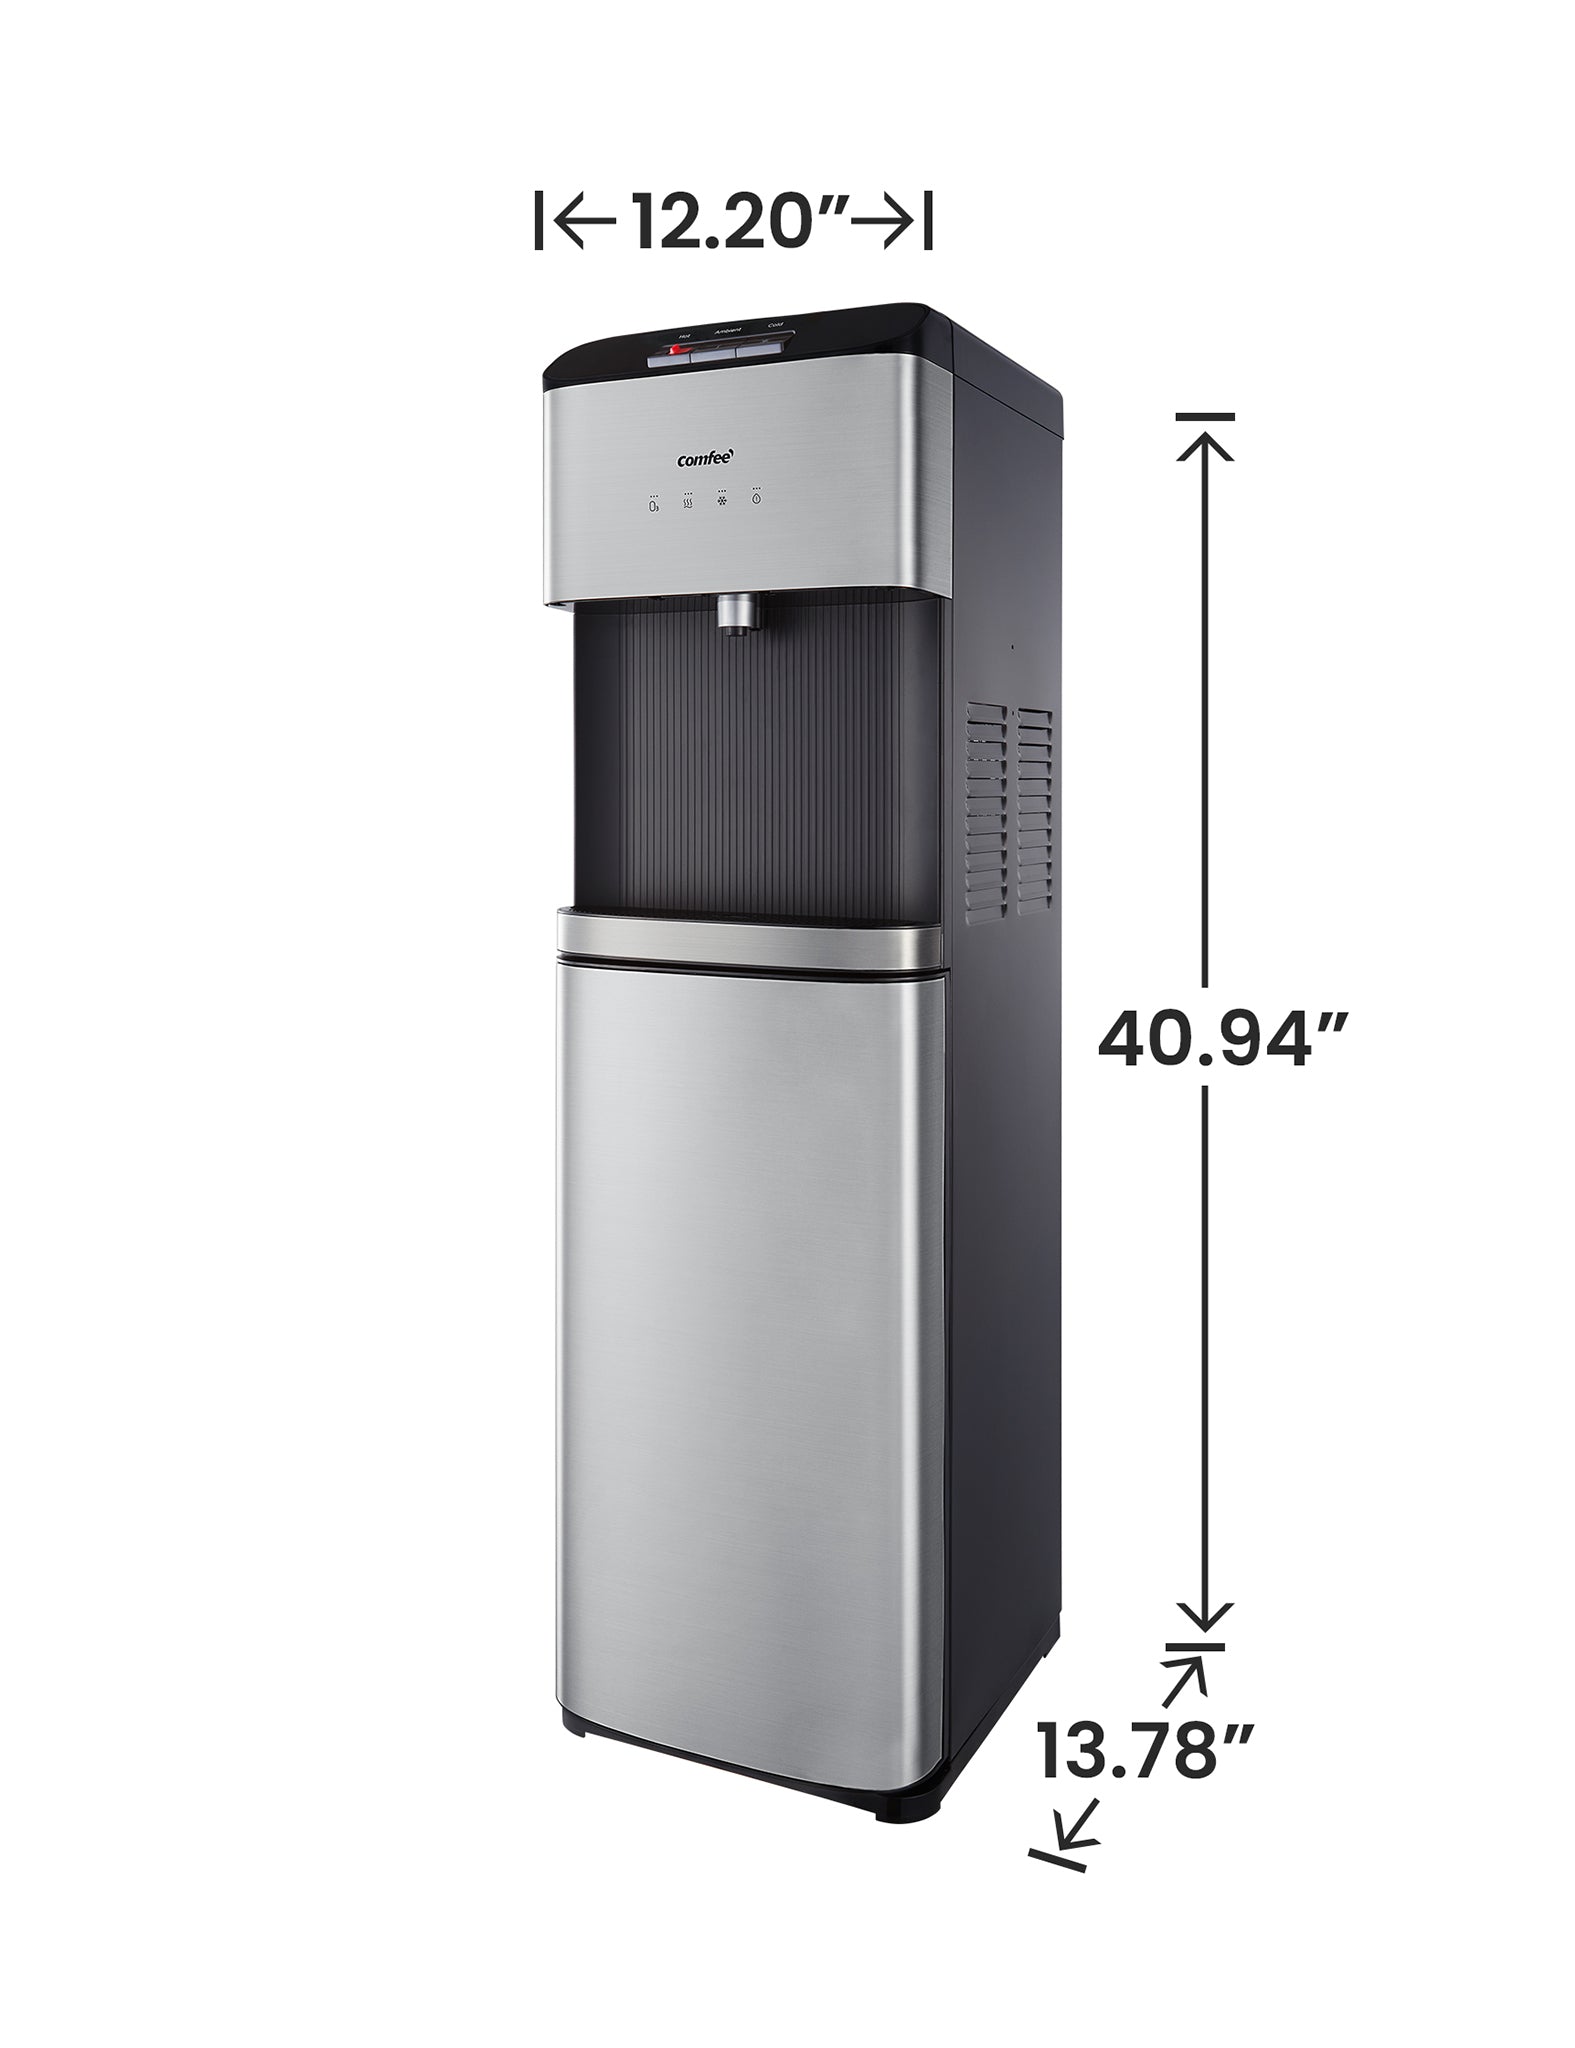 Dimensions of Bottom Loading Water Dispenser